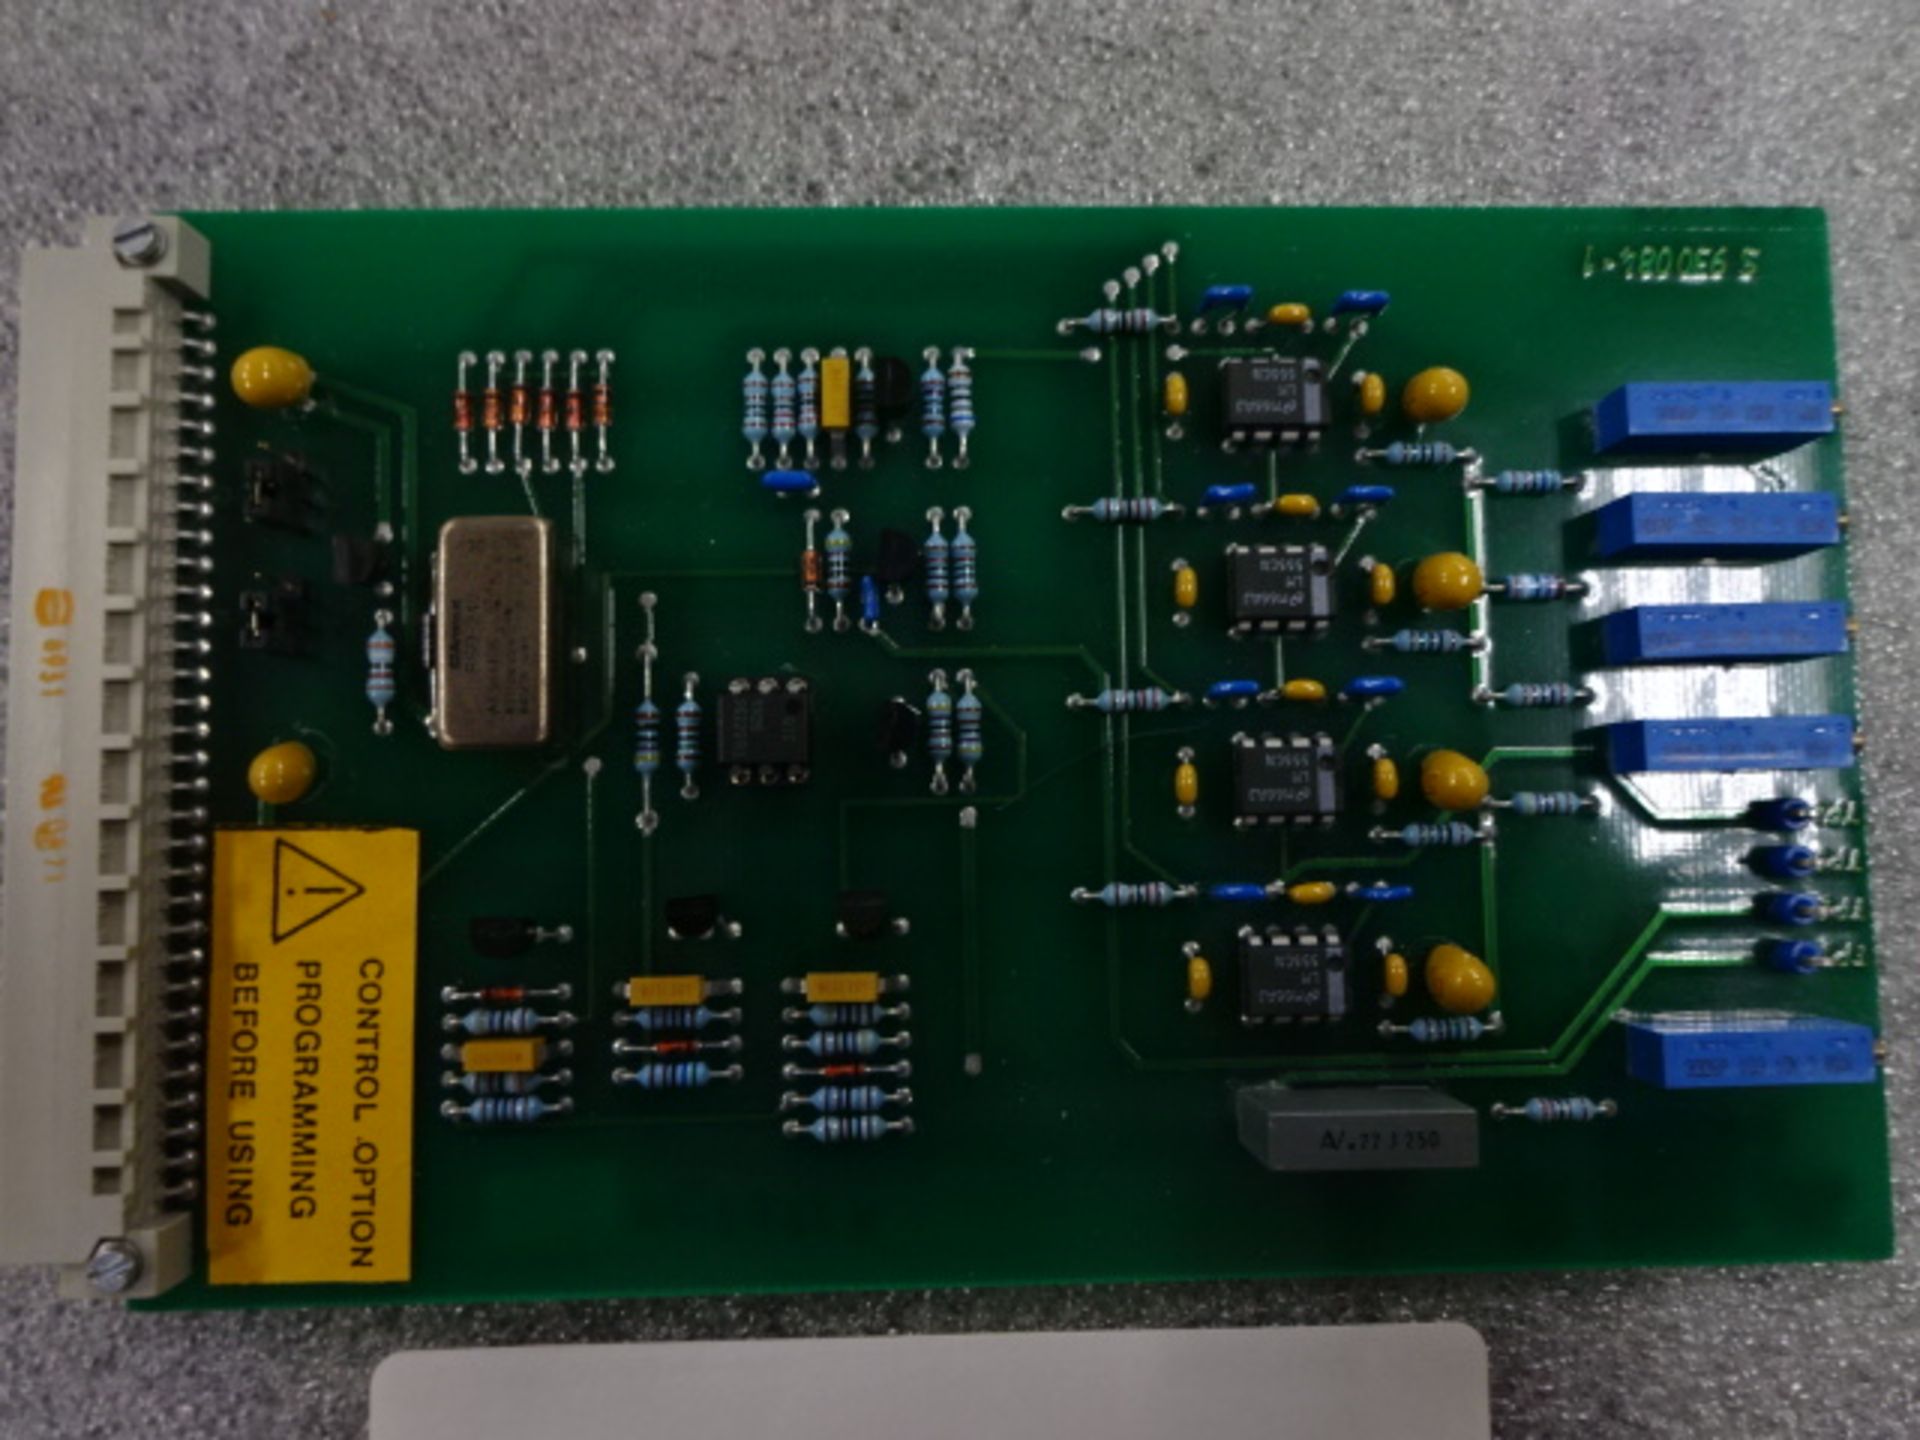 Circuit Imprimé - Electronic Board - Image 2 of 5